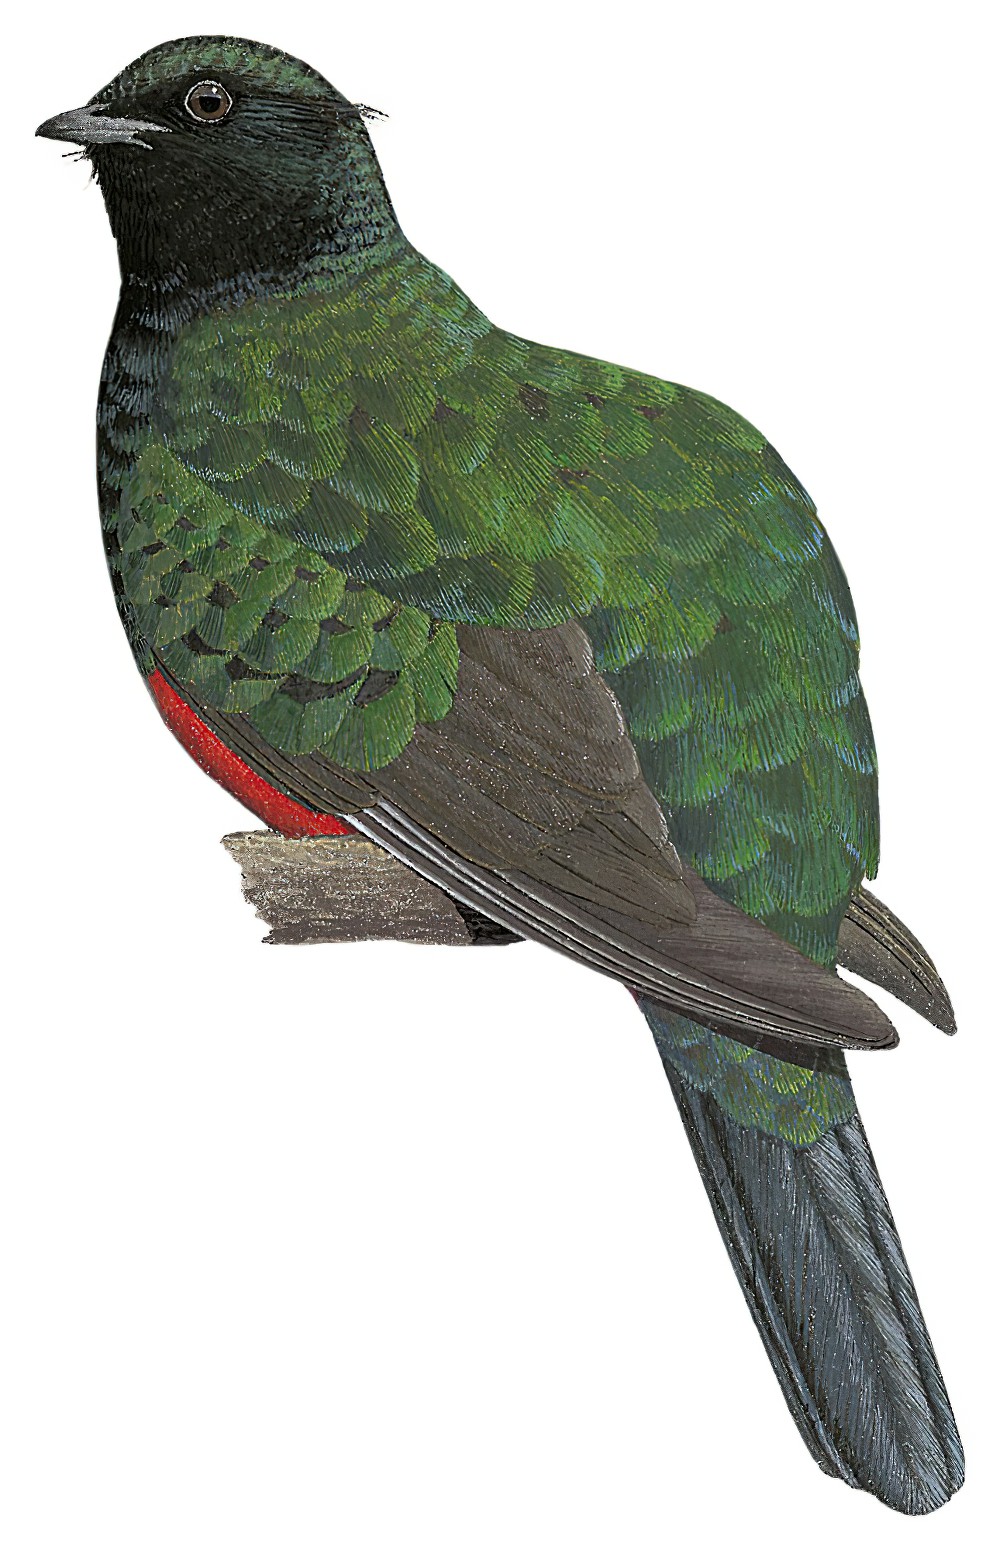 Eared Quetzal / Euptilotis neoxenus